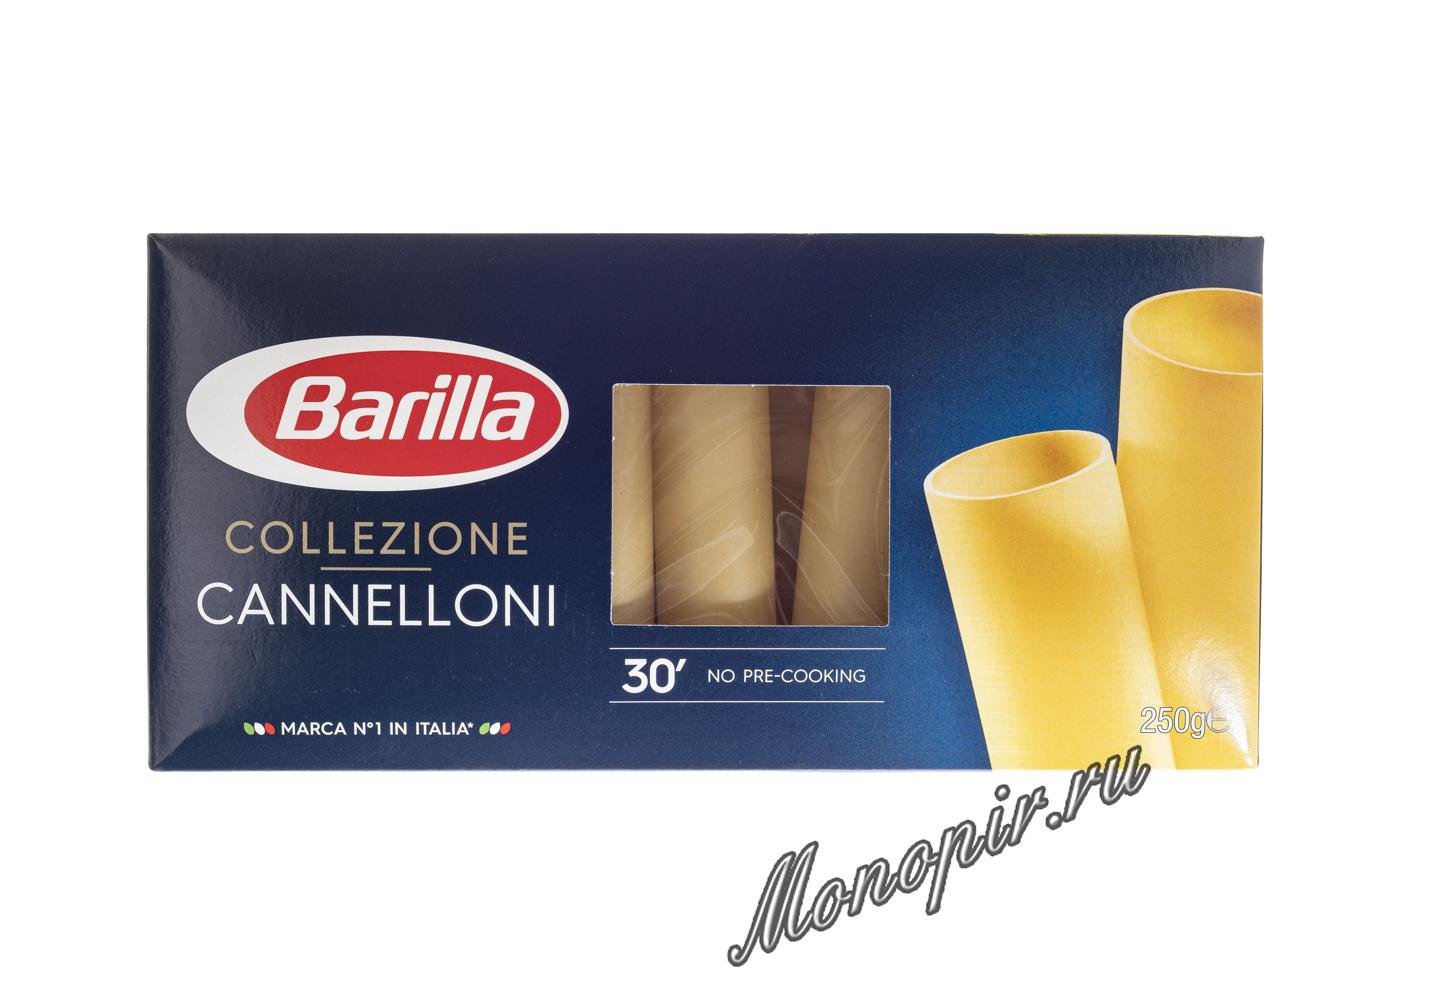 Barilla Макароны Каннеллони (Cannelloni) № 88 (250 г)